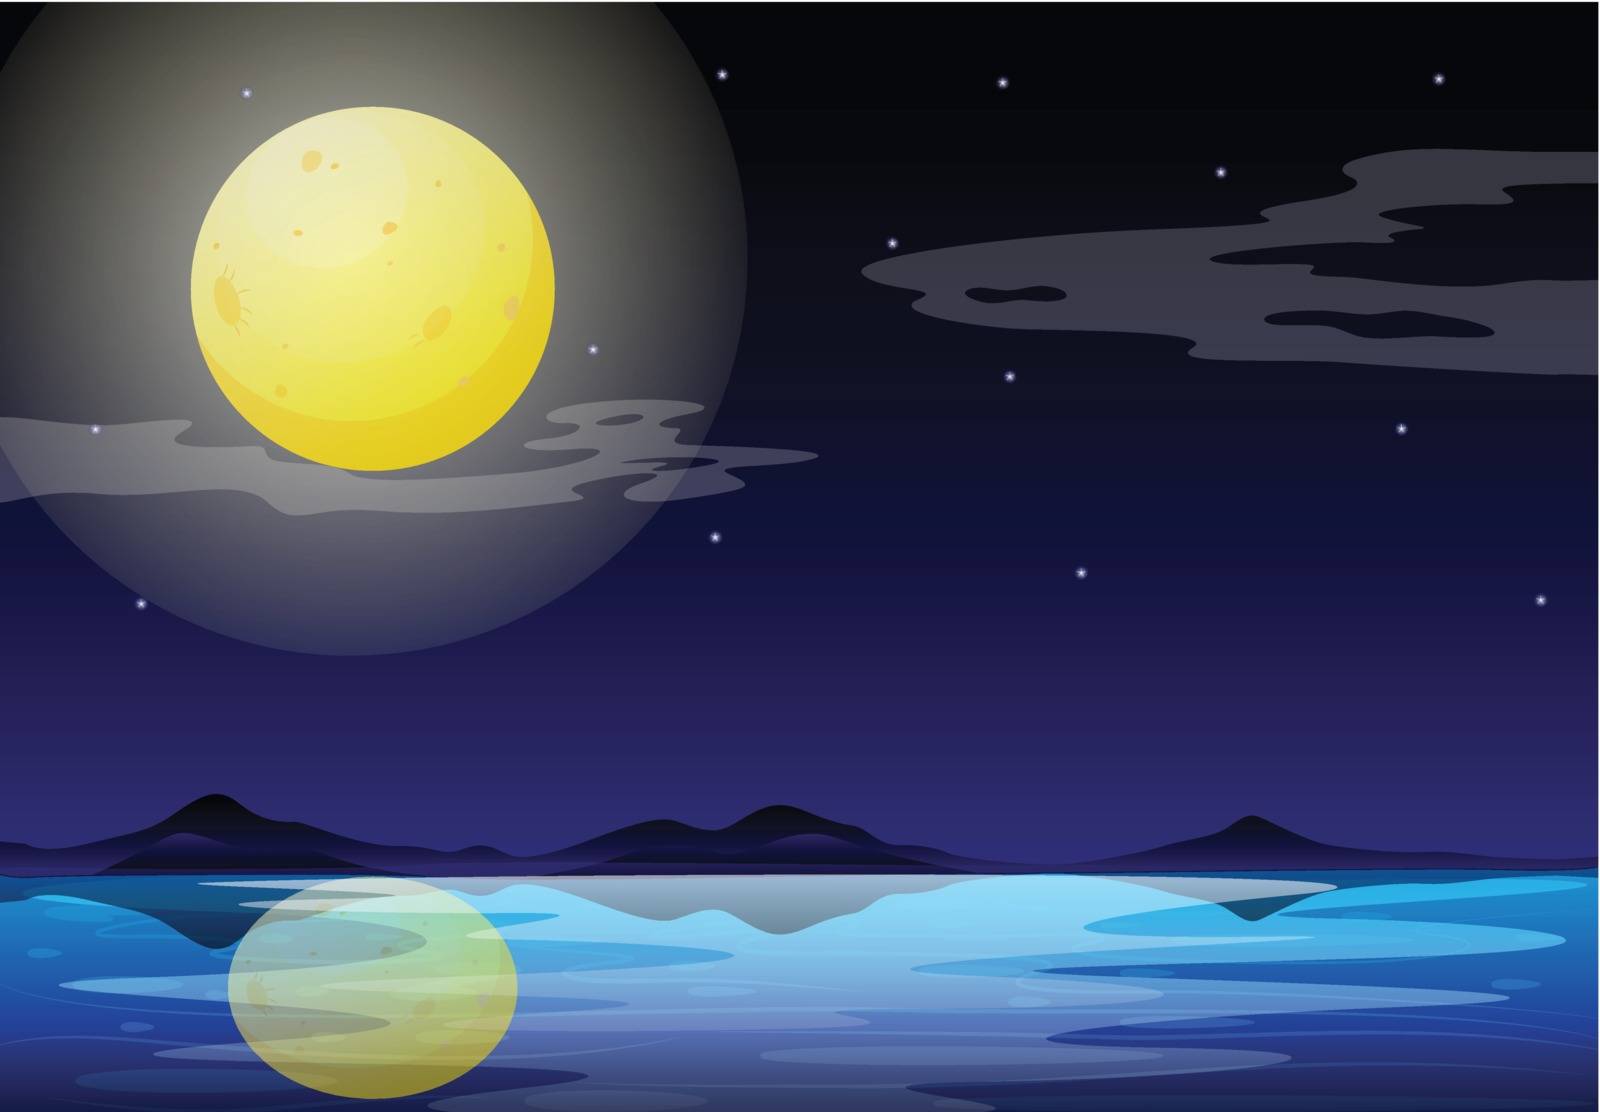 Illustration of a moonlight scenery